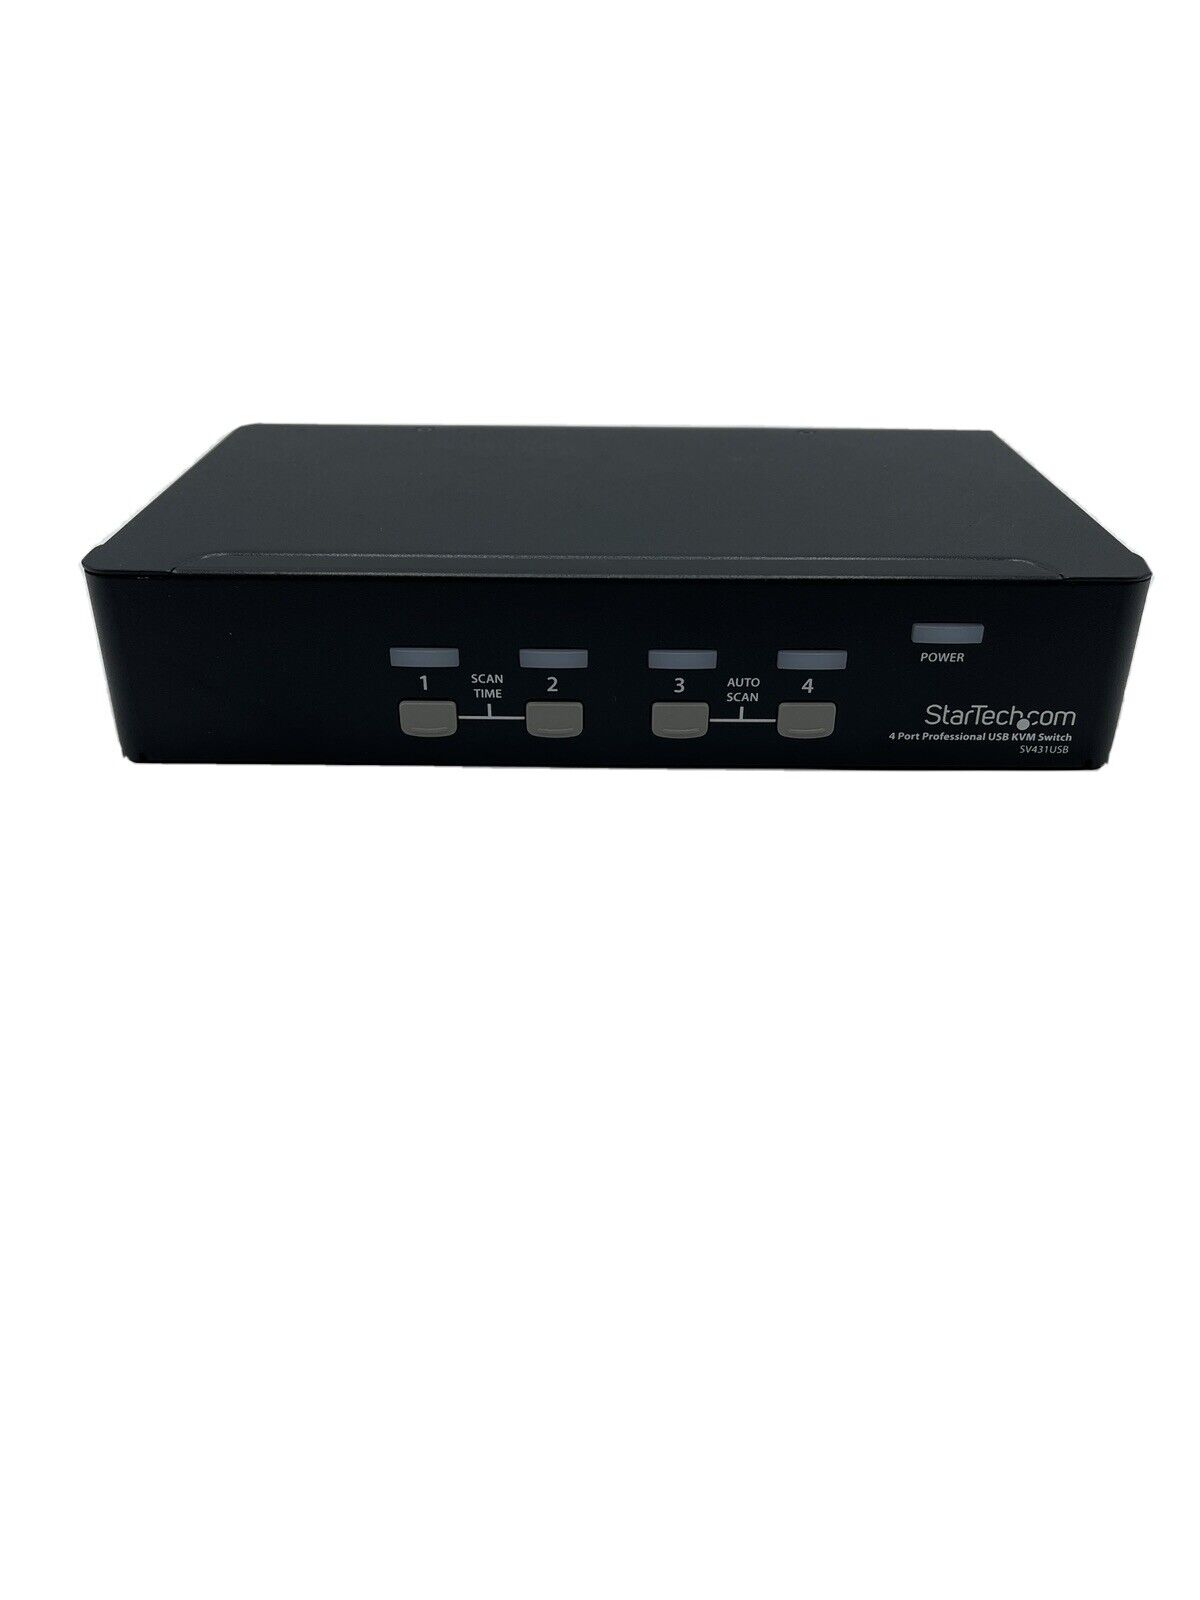 StarTech 4 port Professional USB KVM Switch SV431USB - TESTED + NO AC ADAPTER